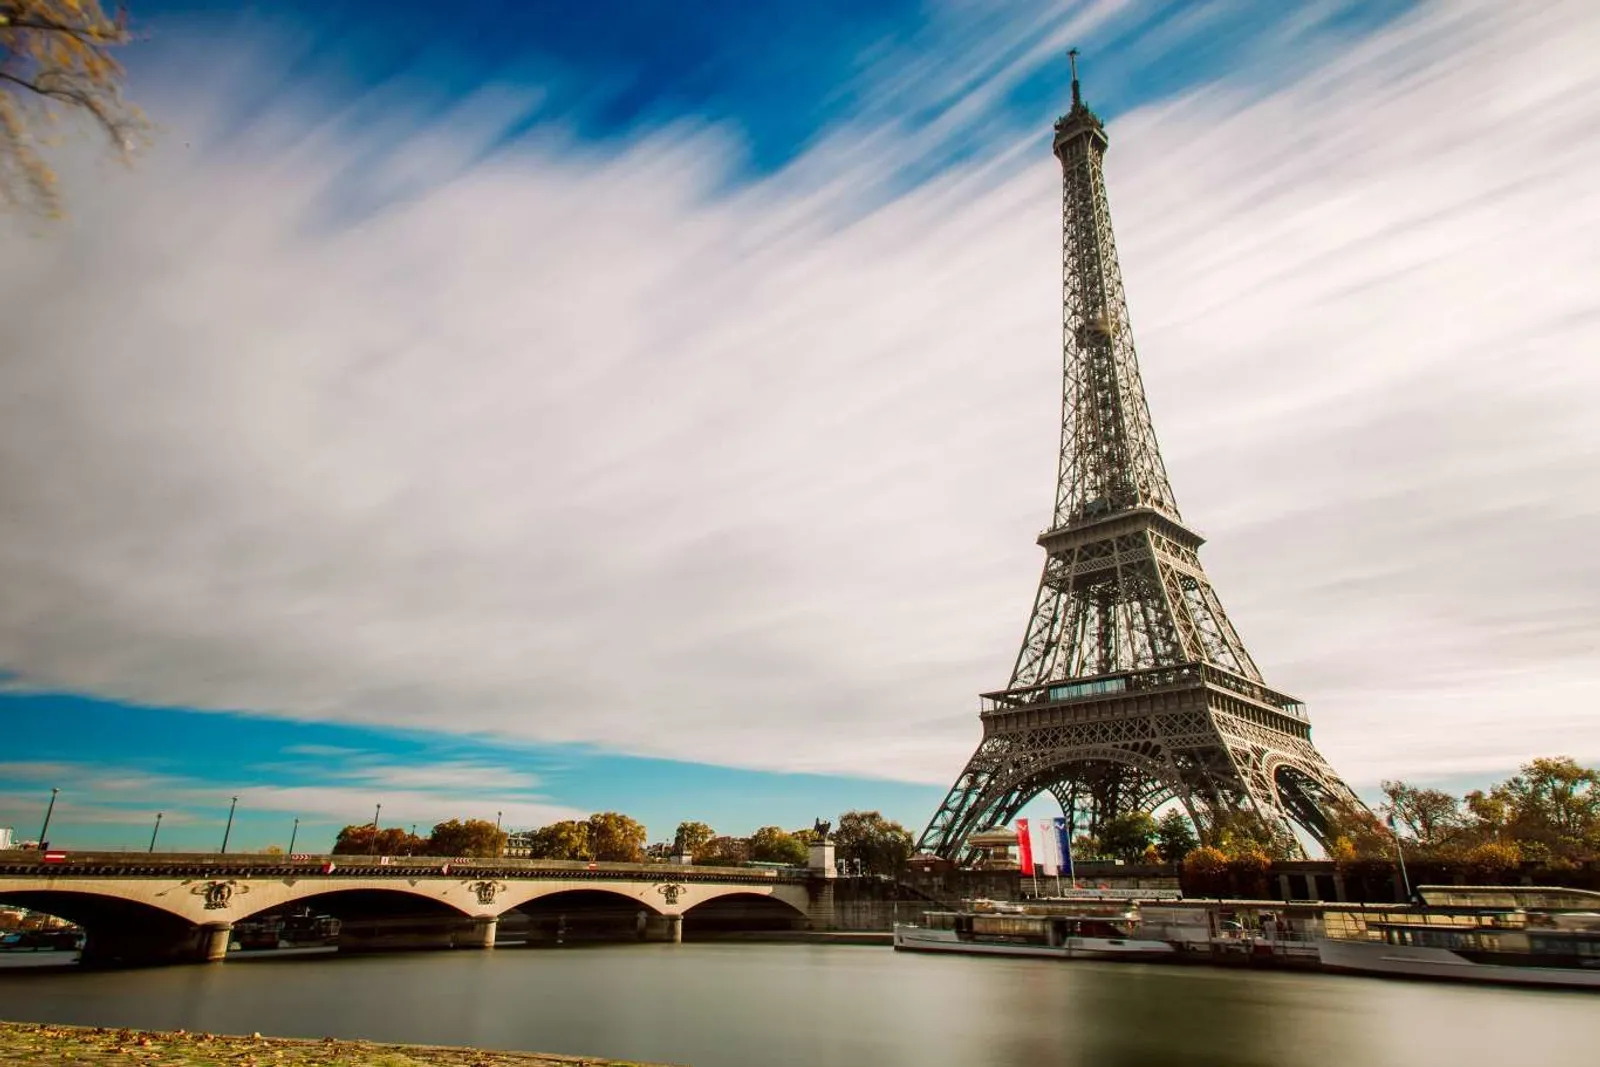 Pelanggaran! Mengunggah Gambar Eiffel di Media Sosial Menyalahi Hukum?